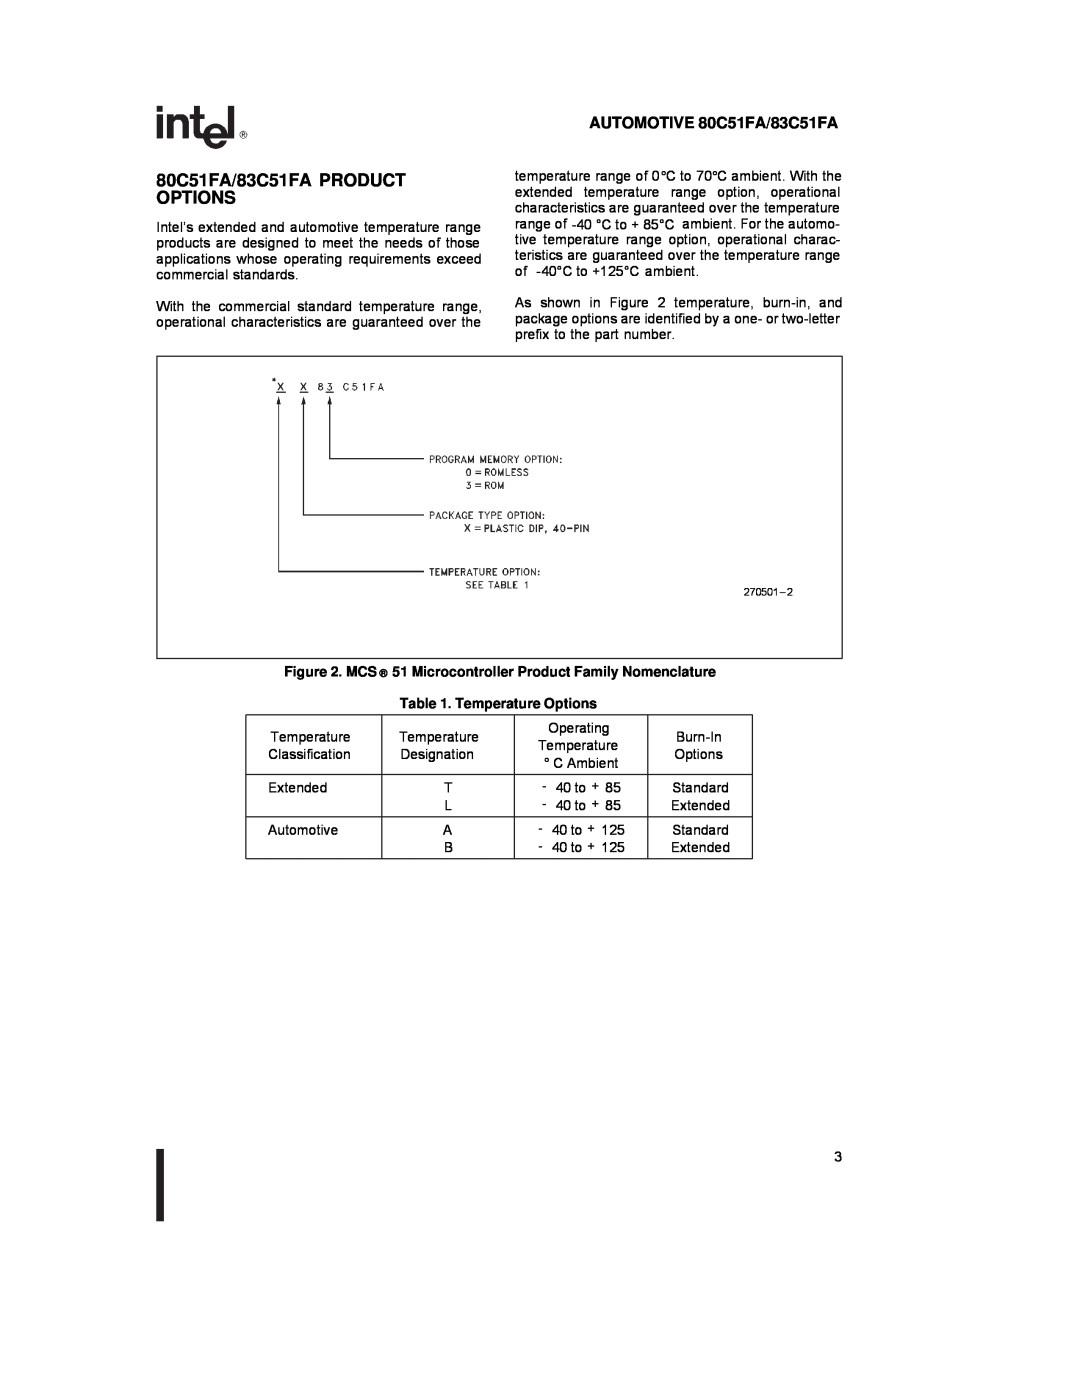 Intel 80C51FA/83C51FA PRODUCT OPTIONS, MCS 51 Microcontroller Product Family Nomenclature, Temperature Options 